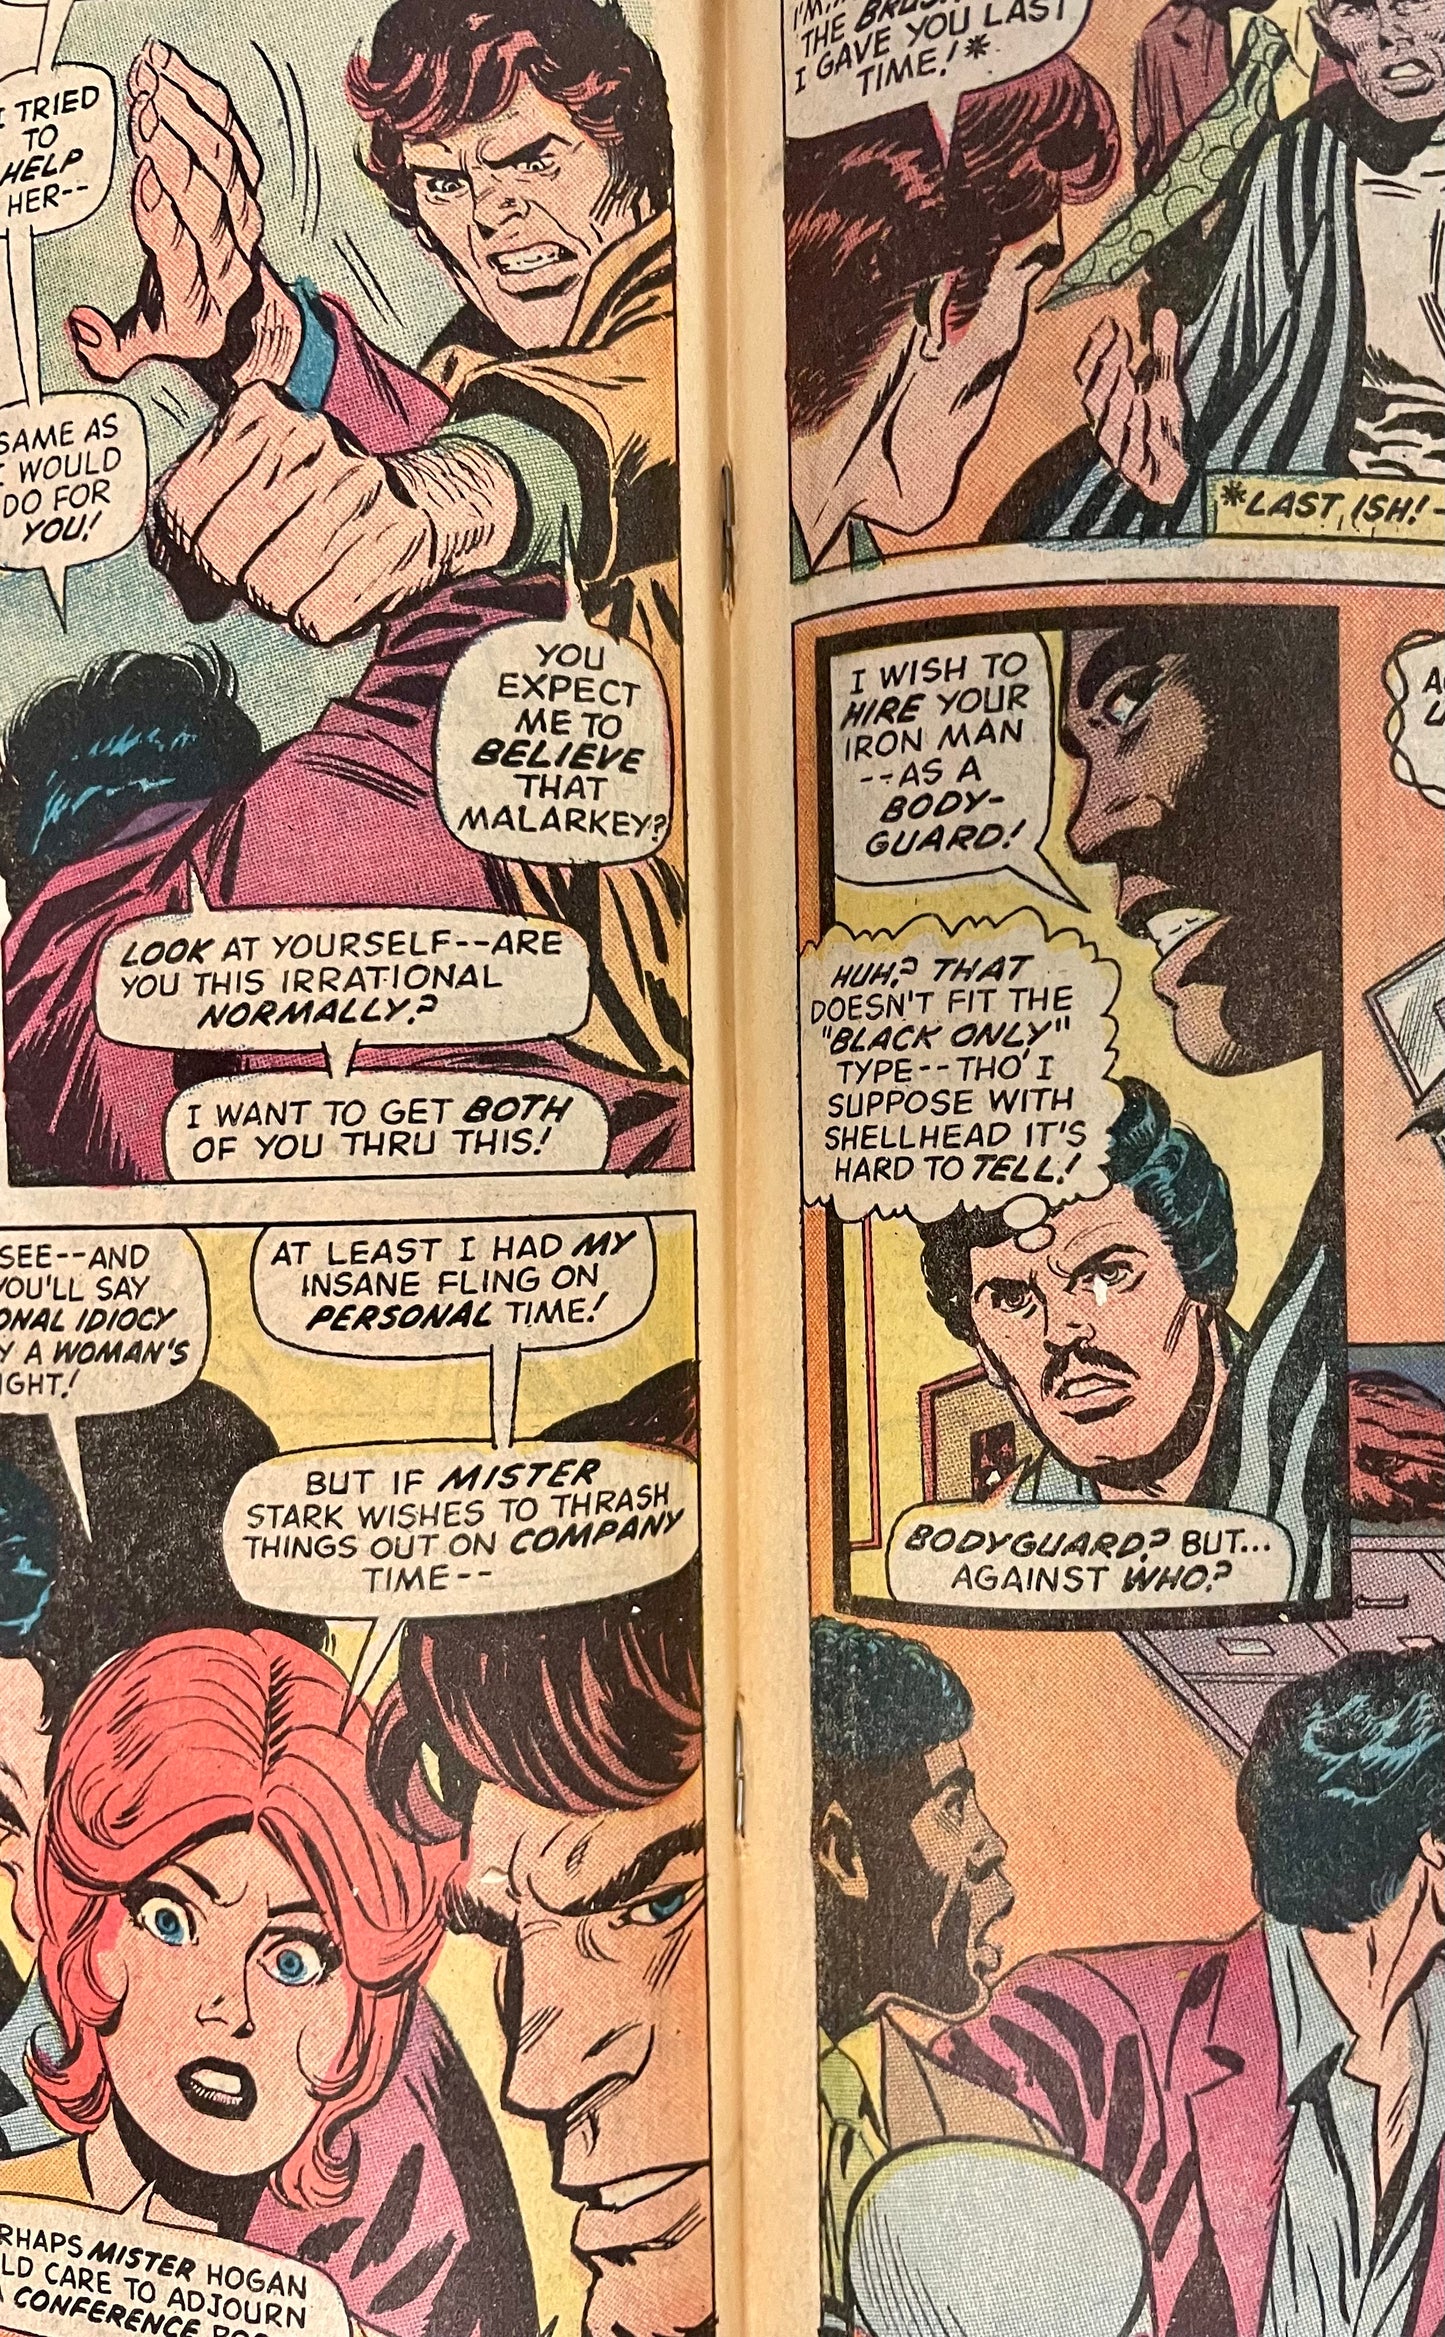 Marvel Comics The Invincible Iron Man #64